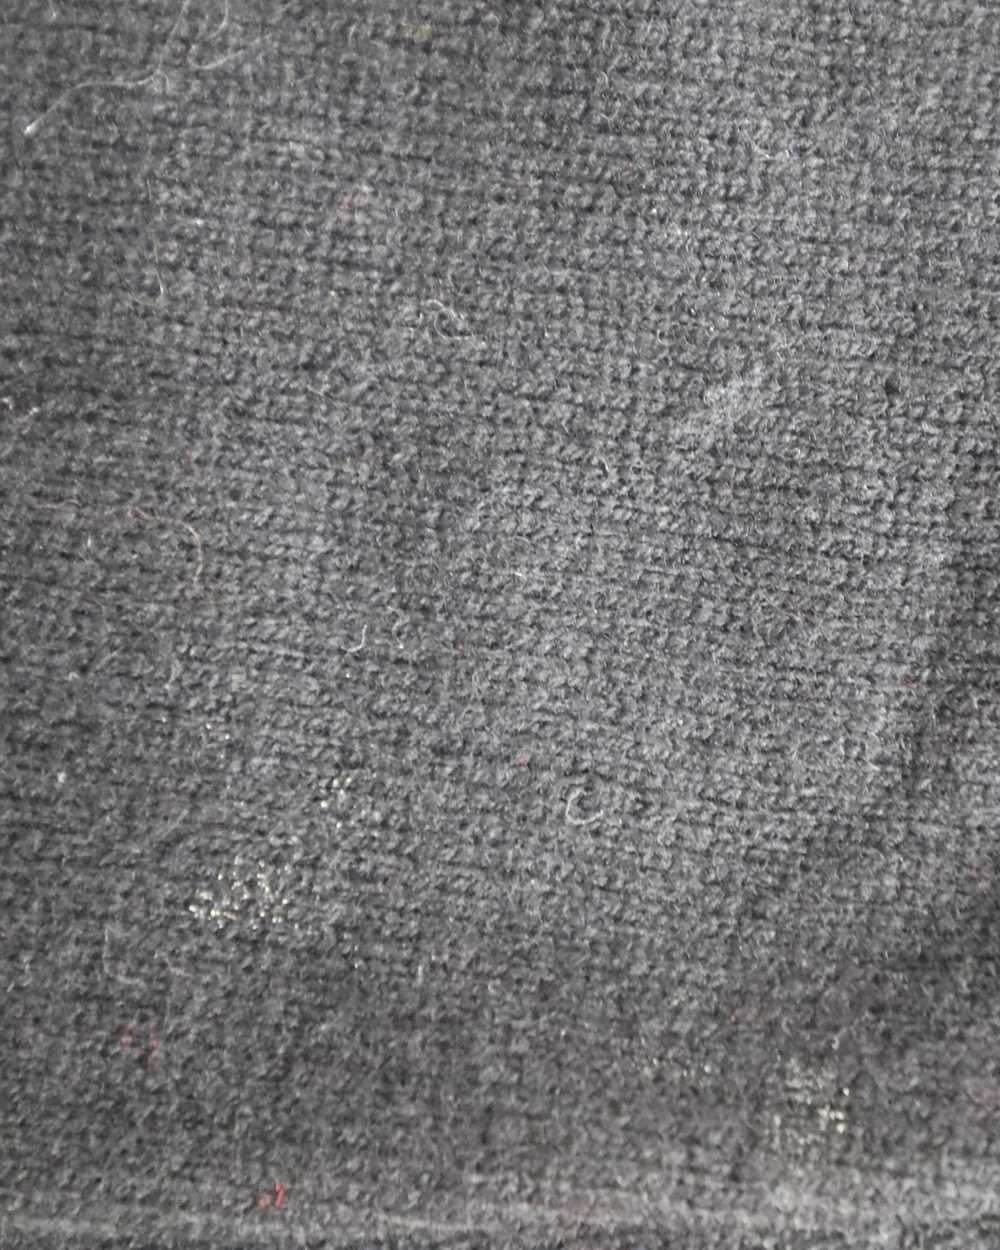 Product Details Floral Printed Black Wool Jumper - image 7